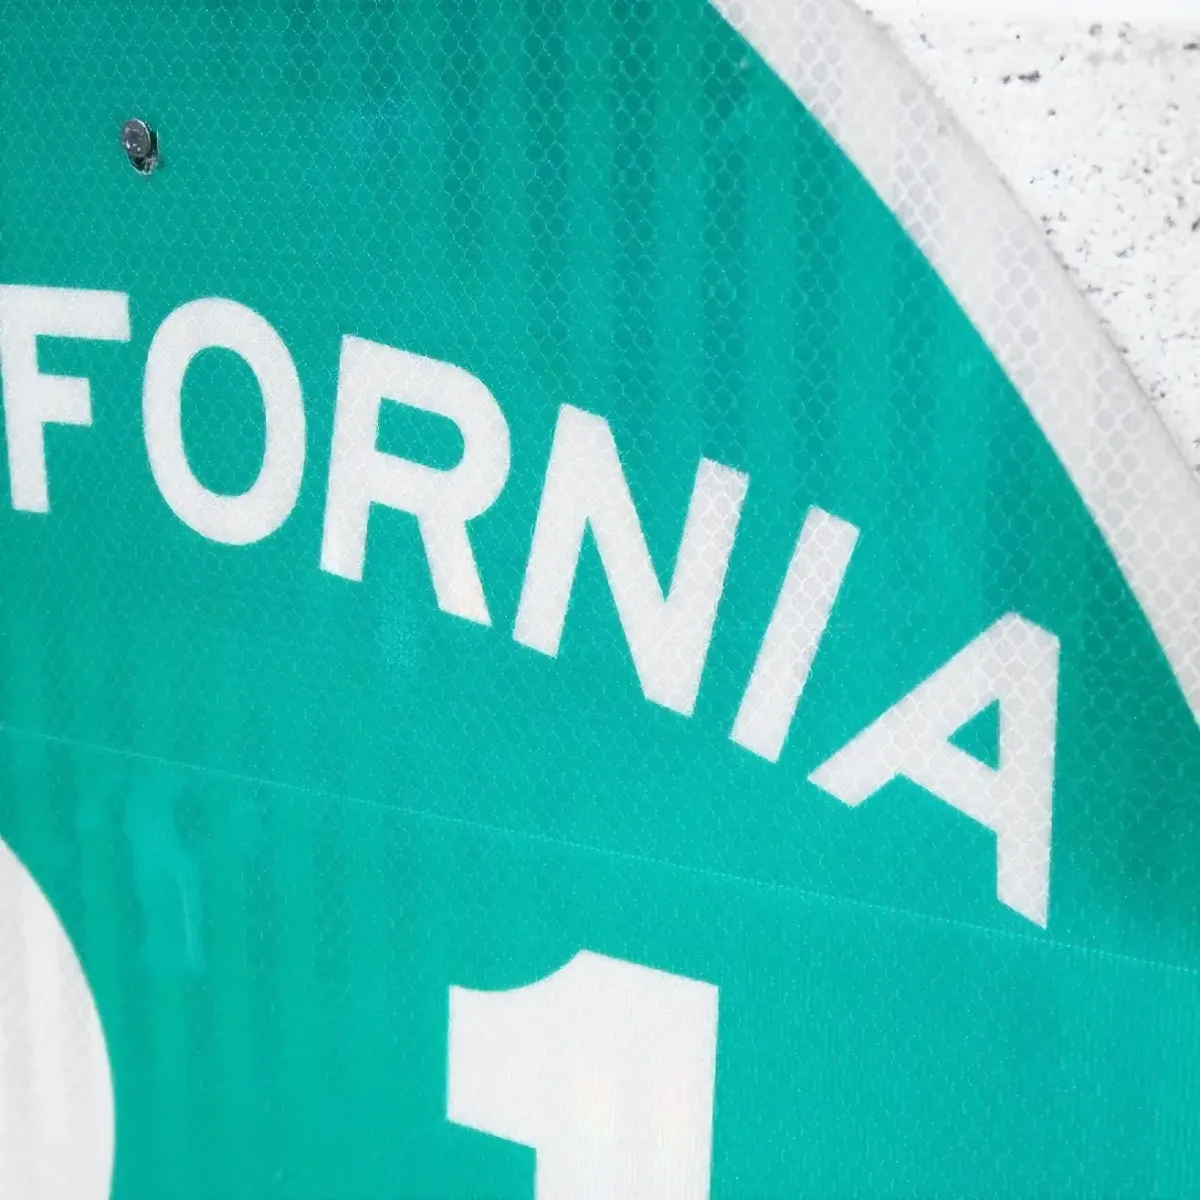 CALIFORNIA 91 ロードサイン